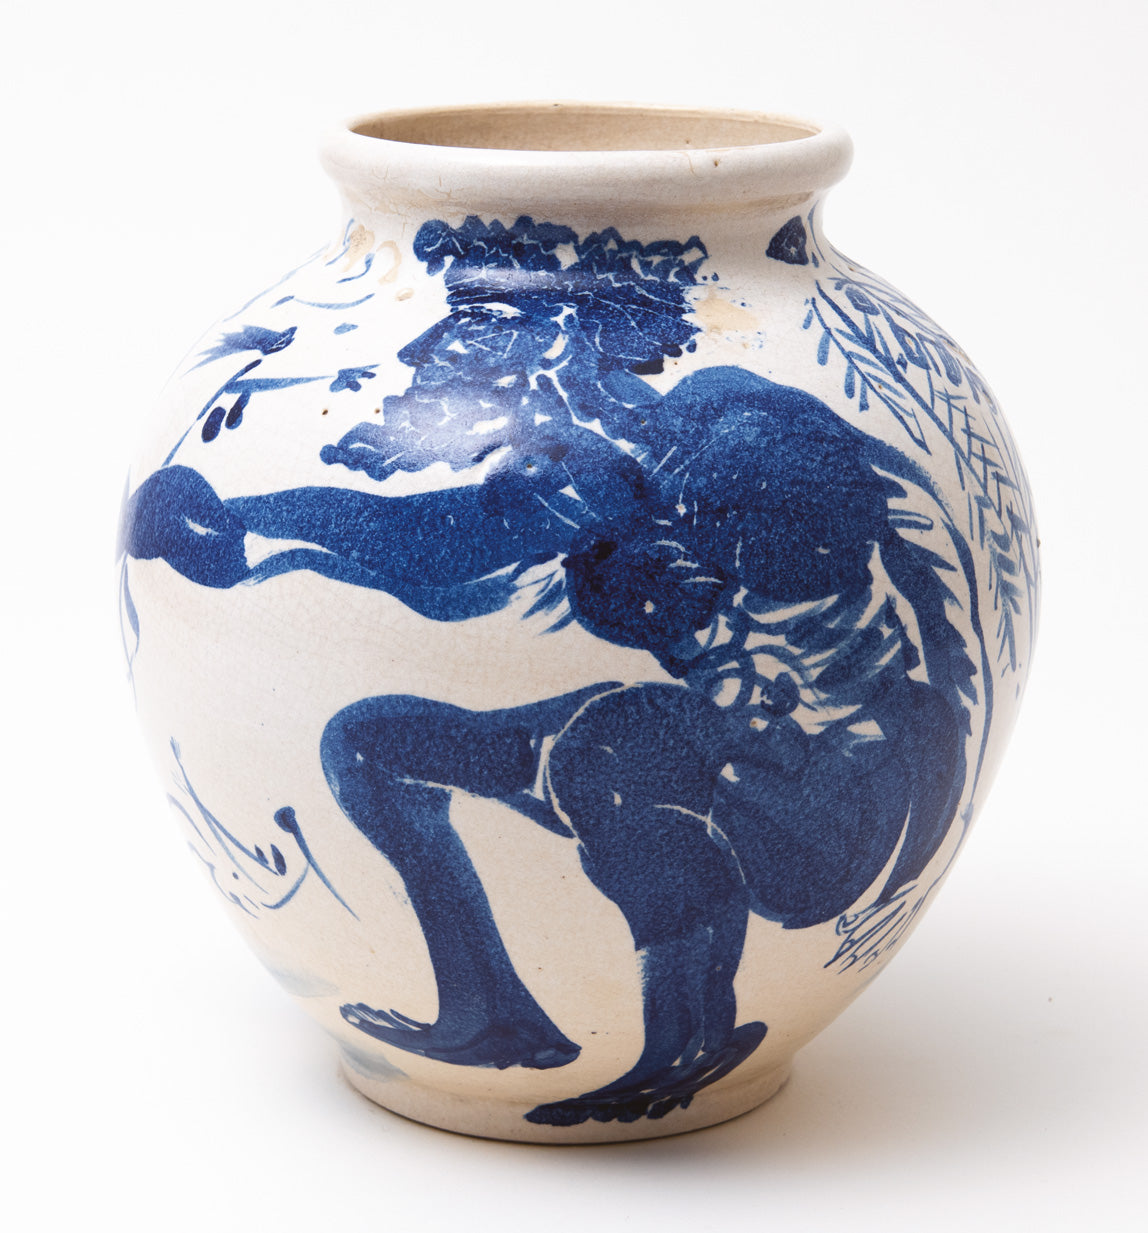 Ceri Richards, Greek Vase (detail), hand-painted ceramic